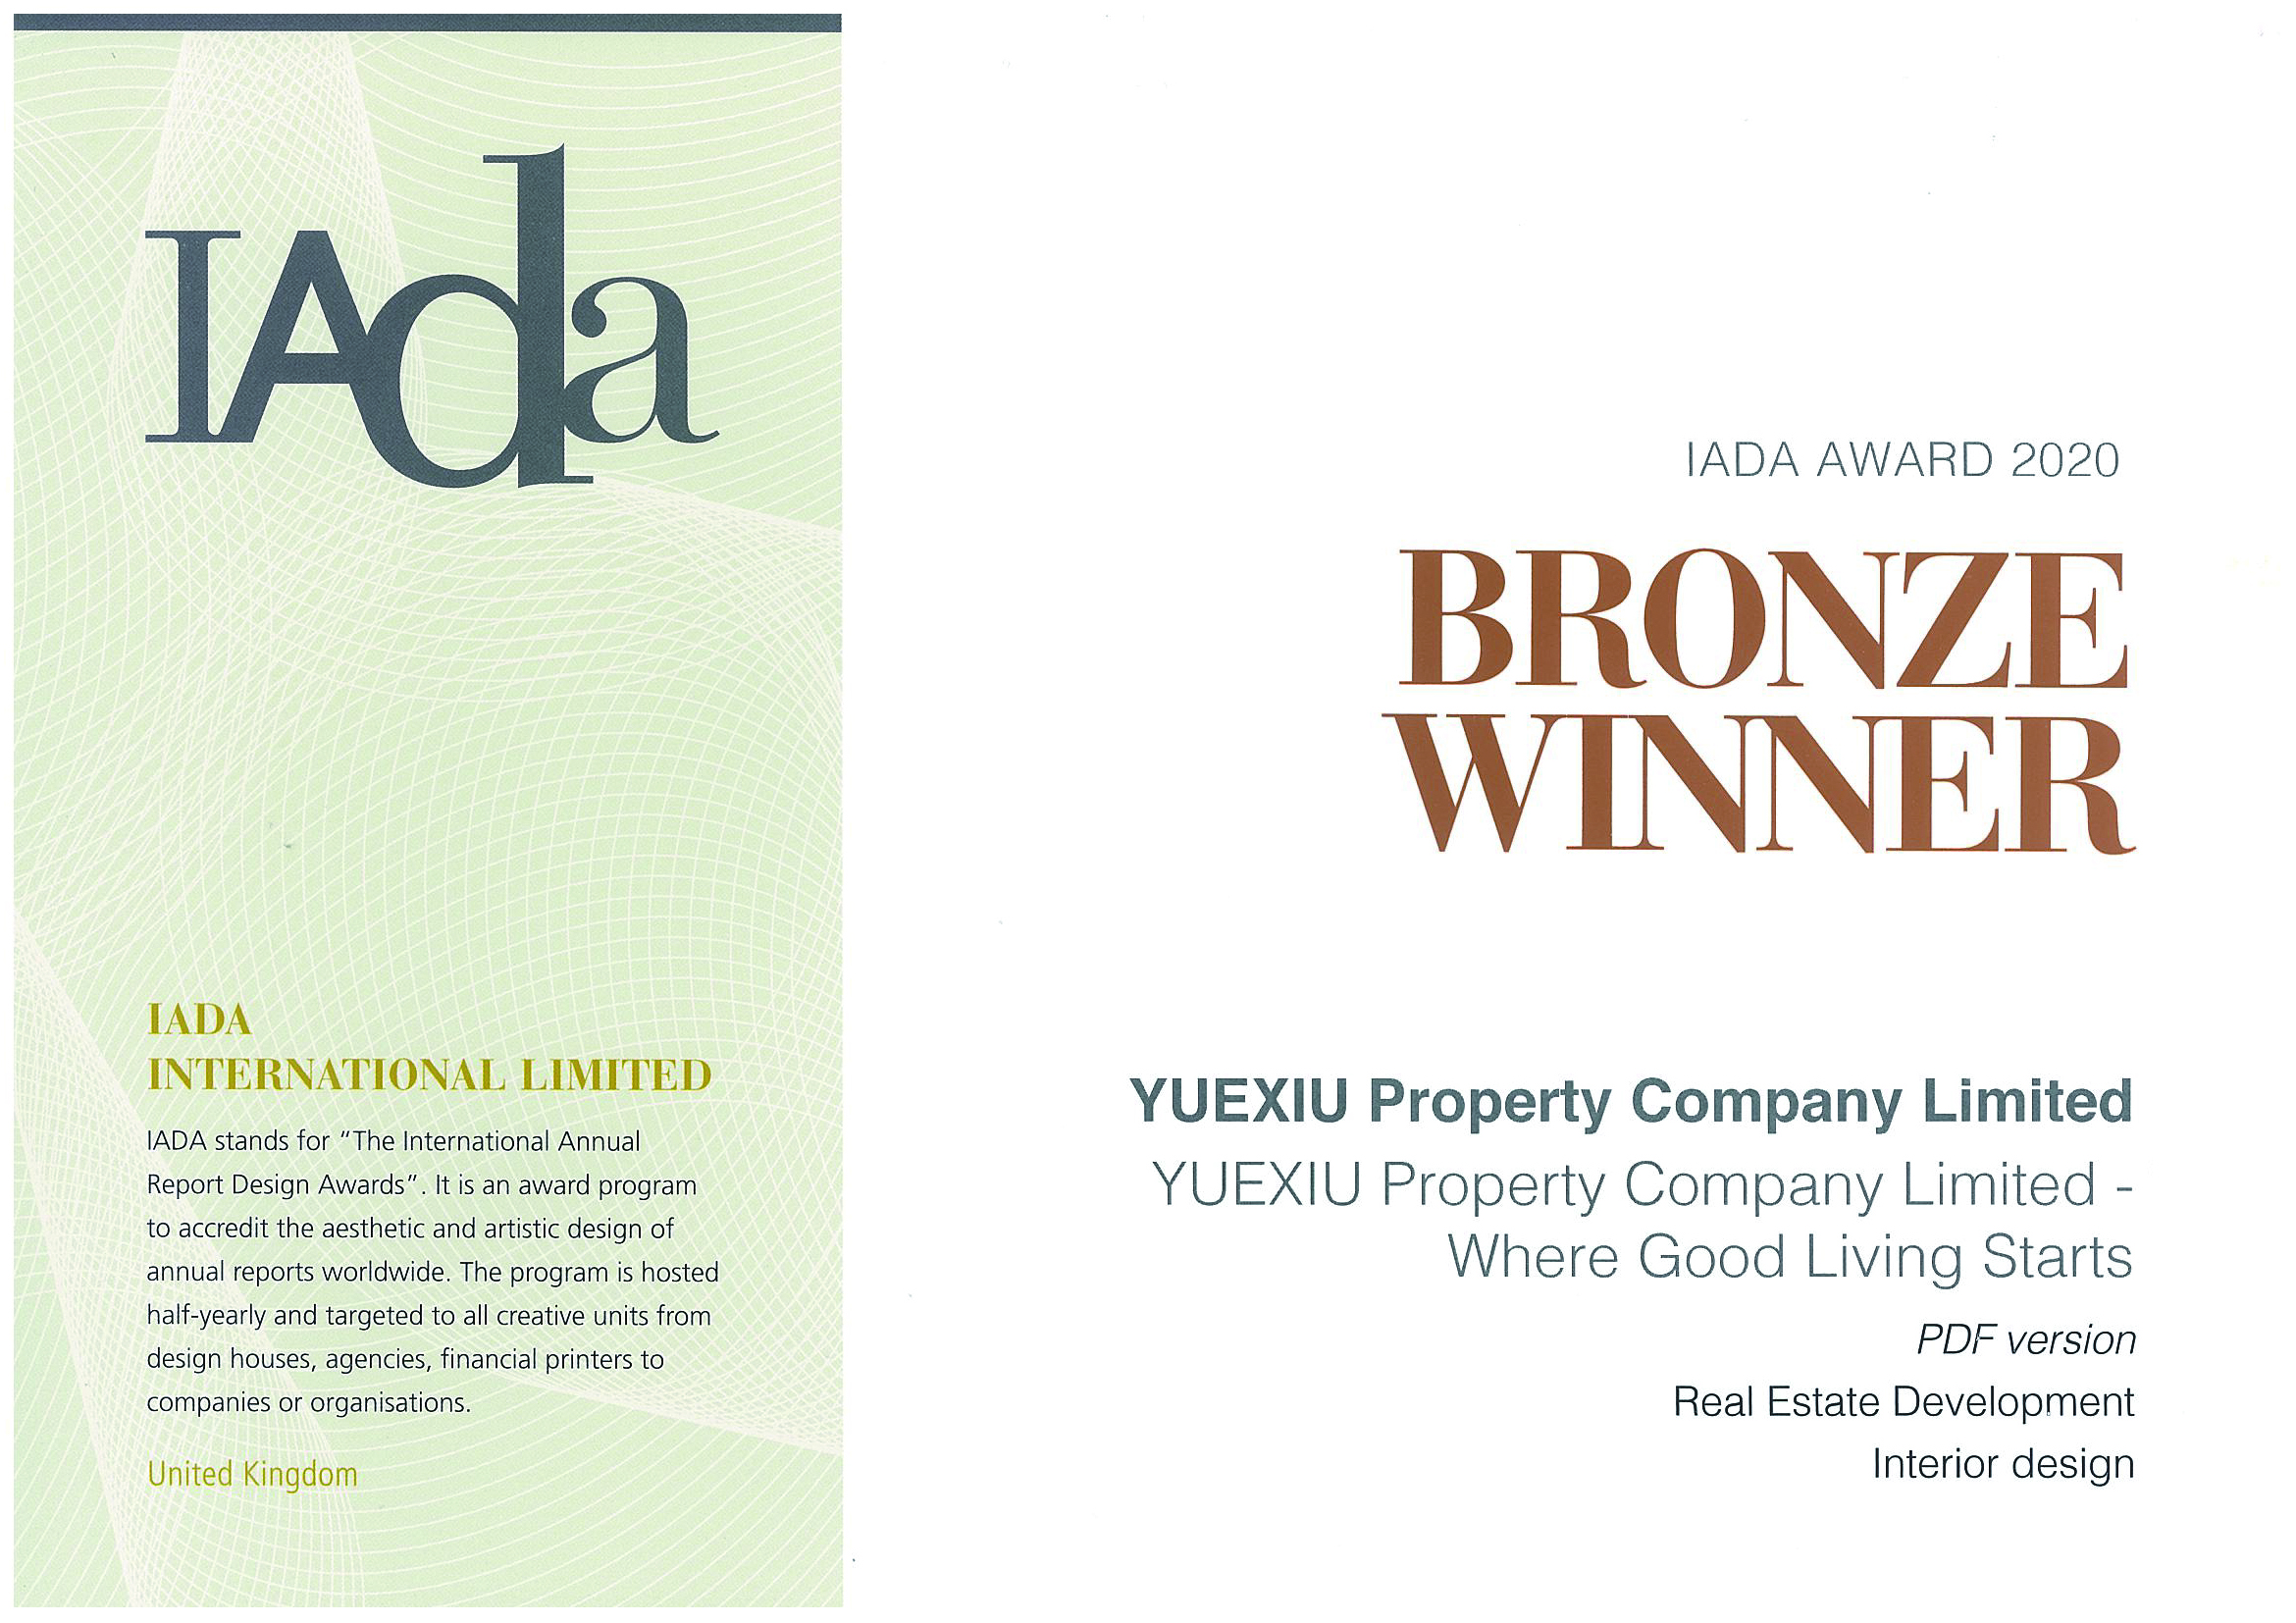 YUEXIU PROPERTY COMPANY LIMITED – IADA AWARD 2020 BRONZE WINNER